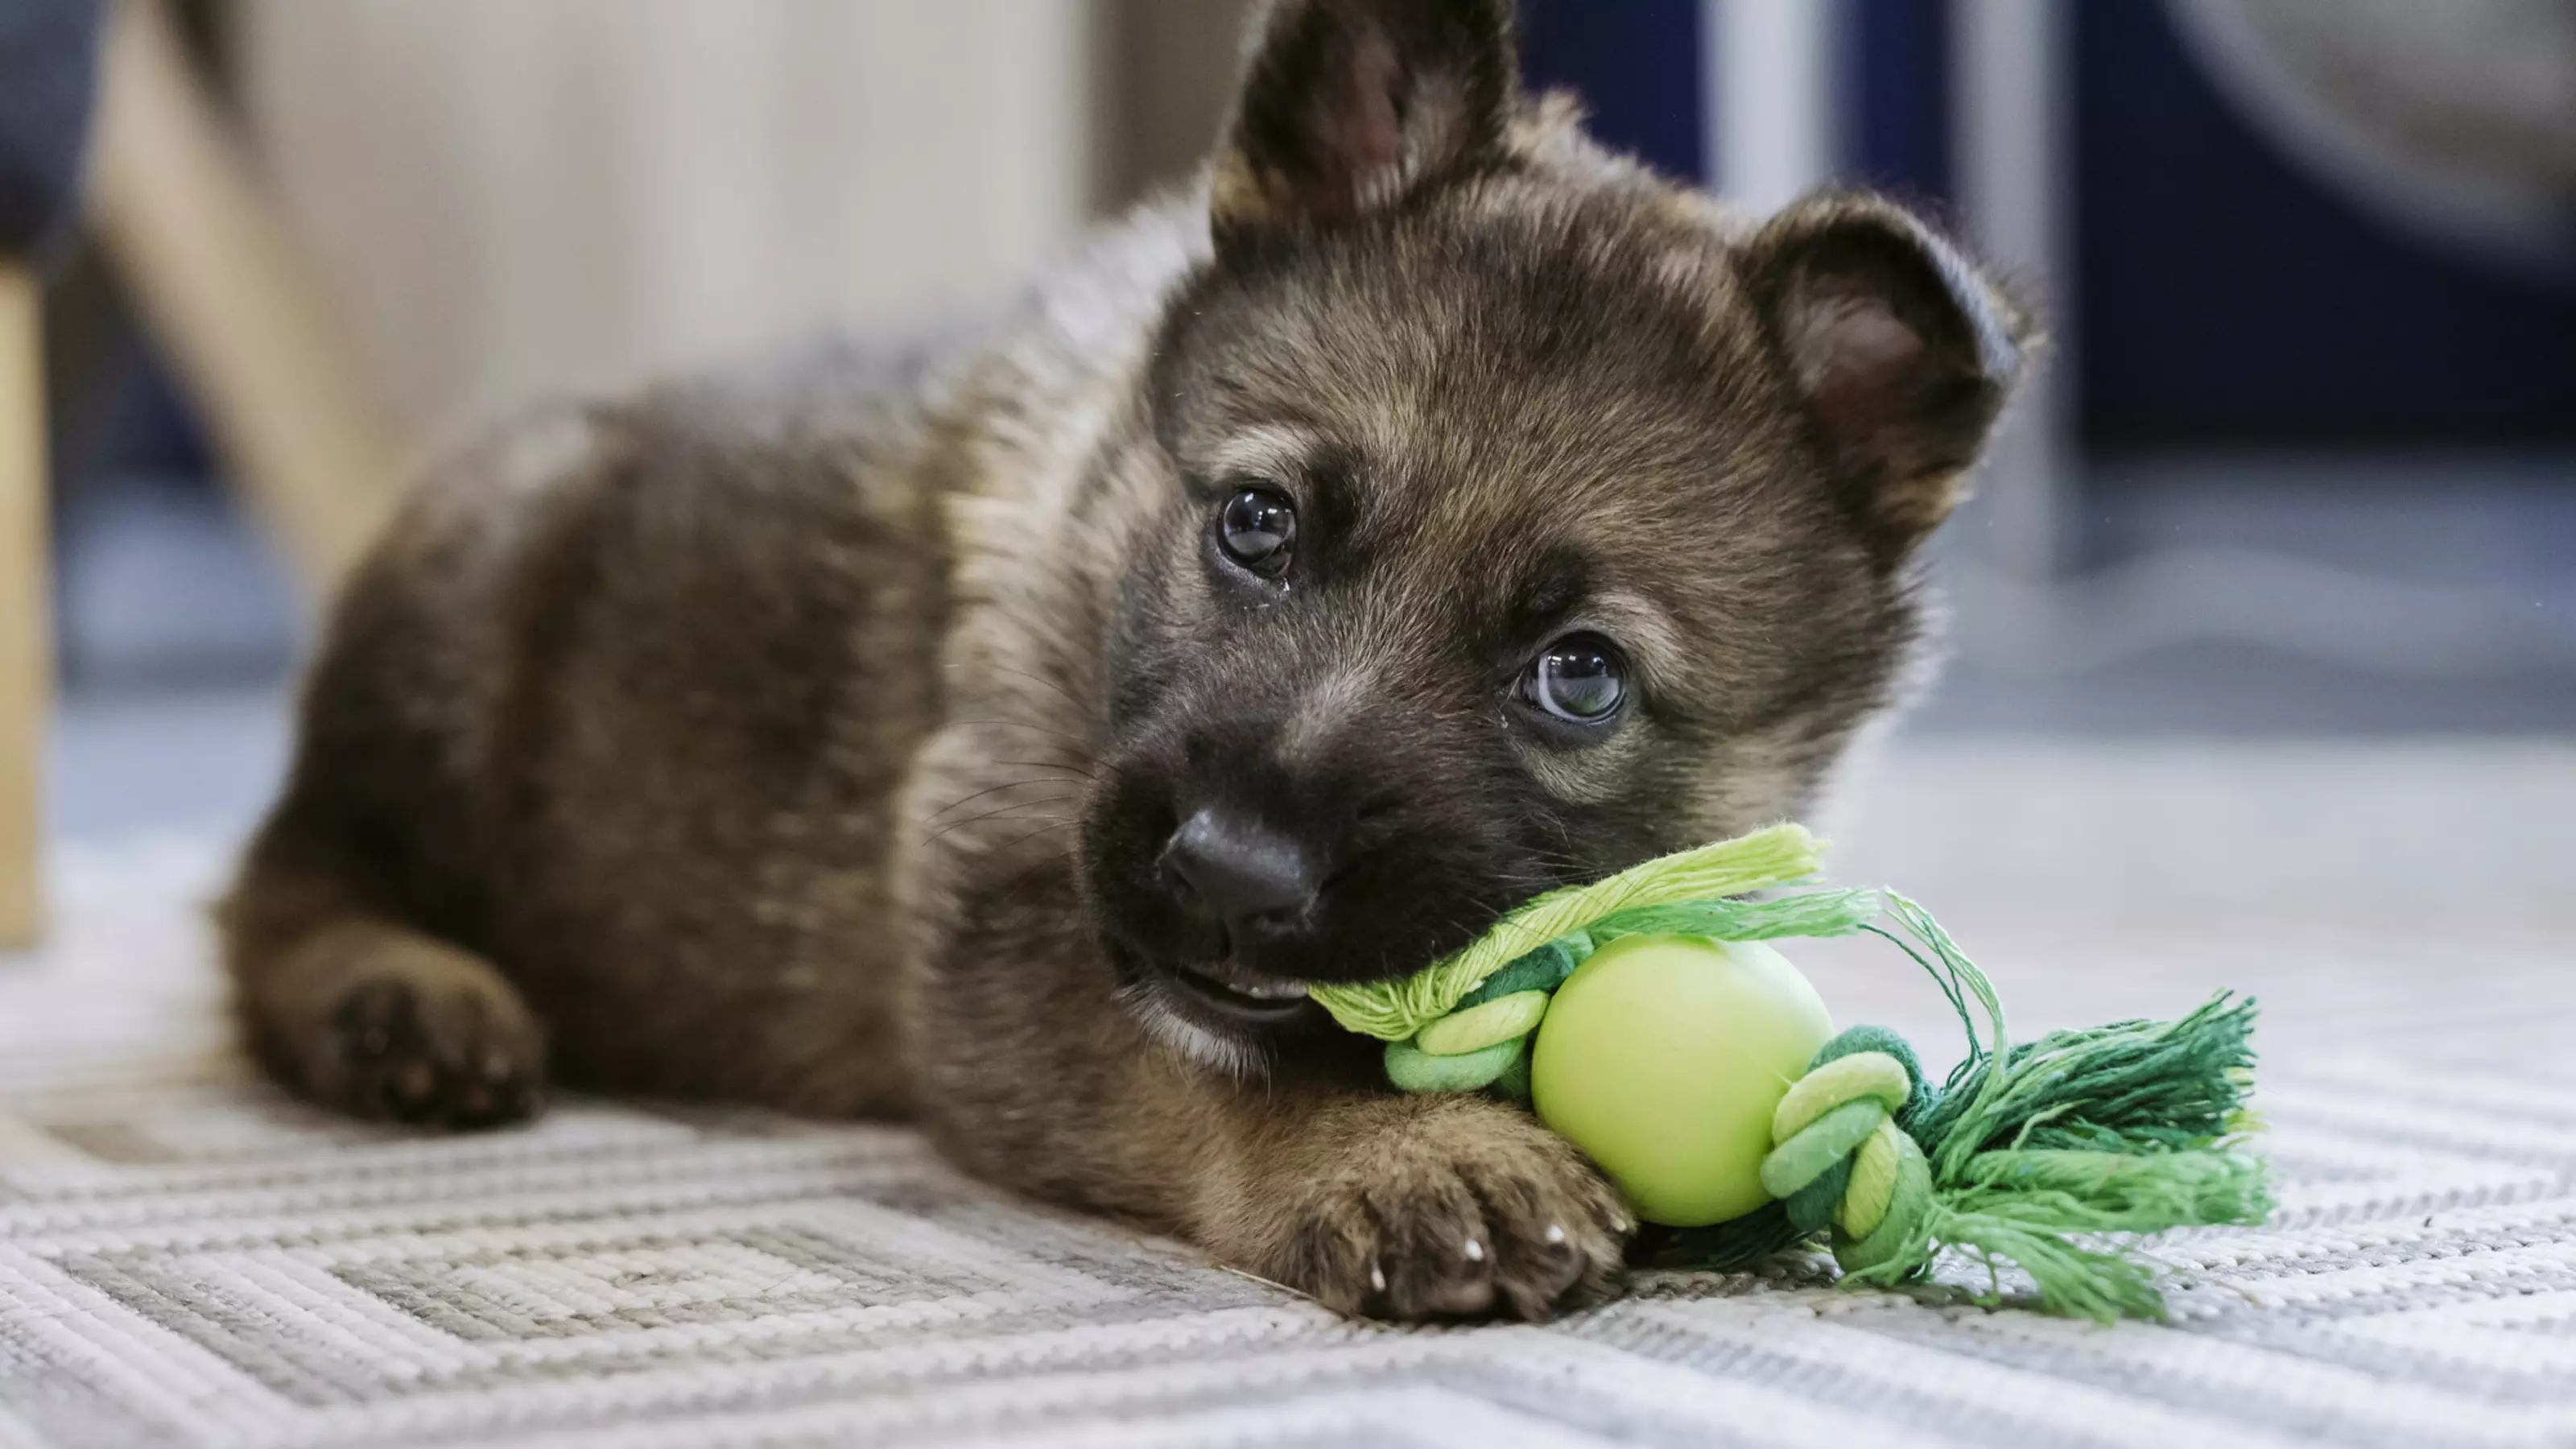 German shepherd puppy Mitzi lies on the floor, chewing a green toy